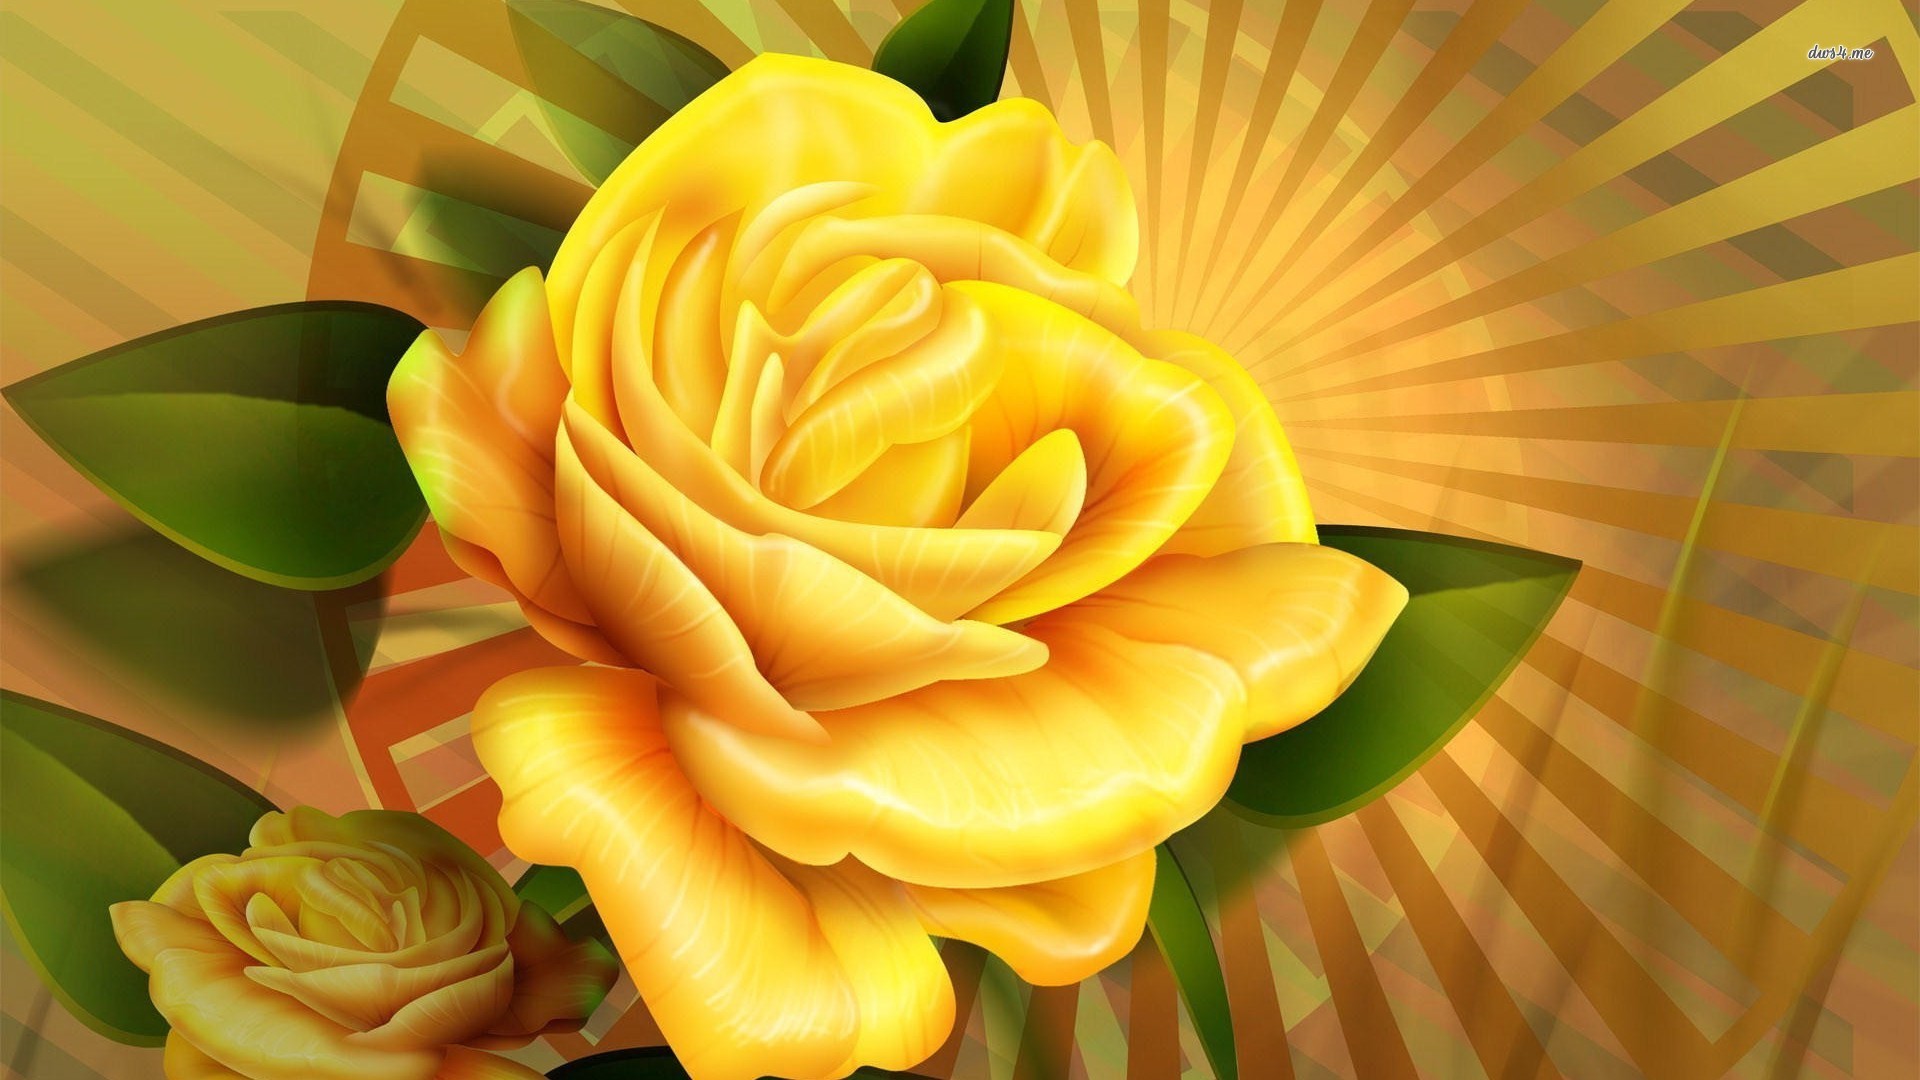 1920x1080 ... Yellow rose wallpaper  ...